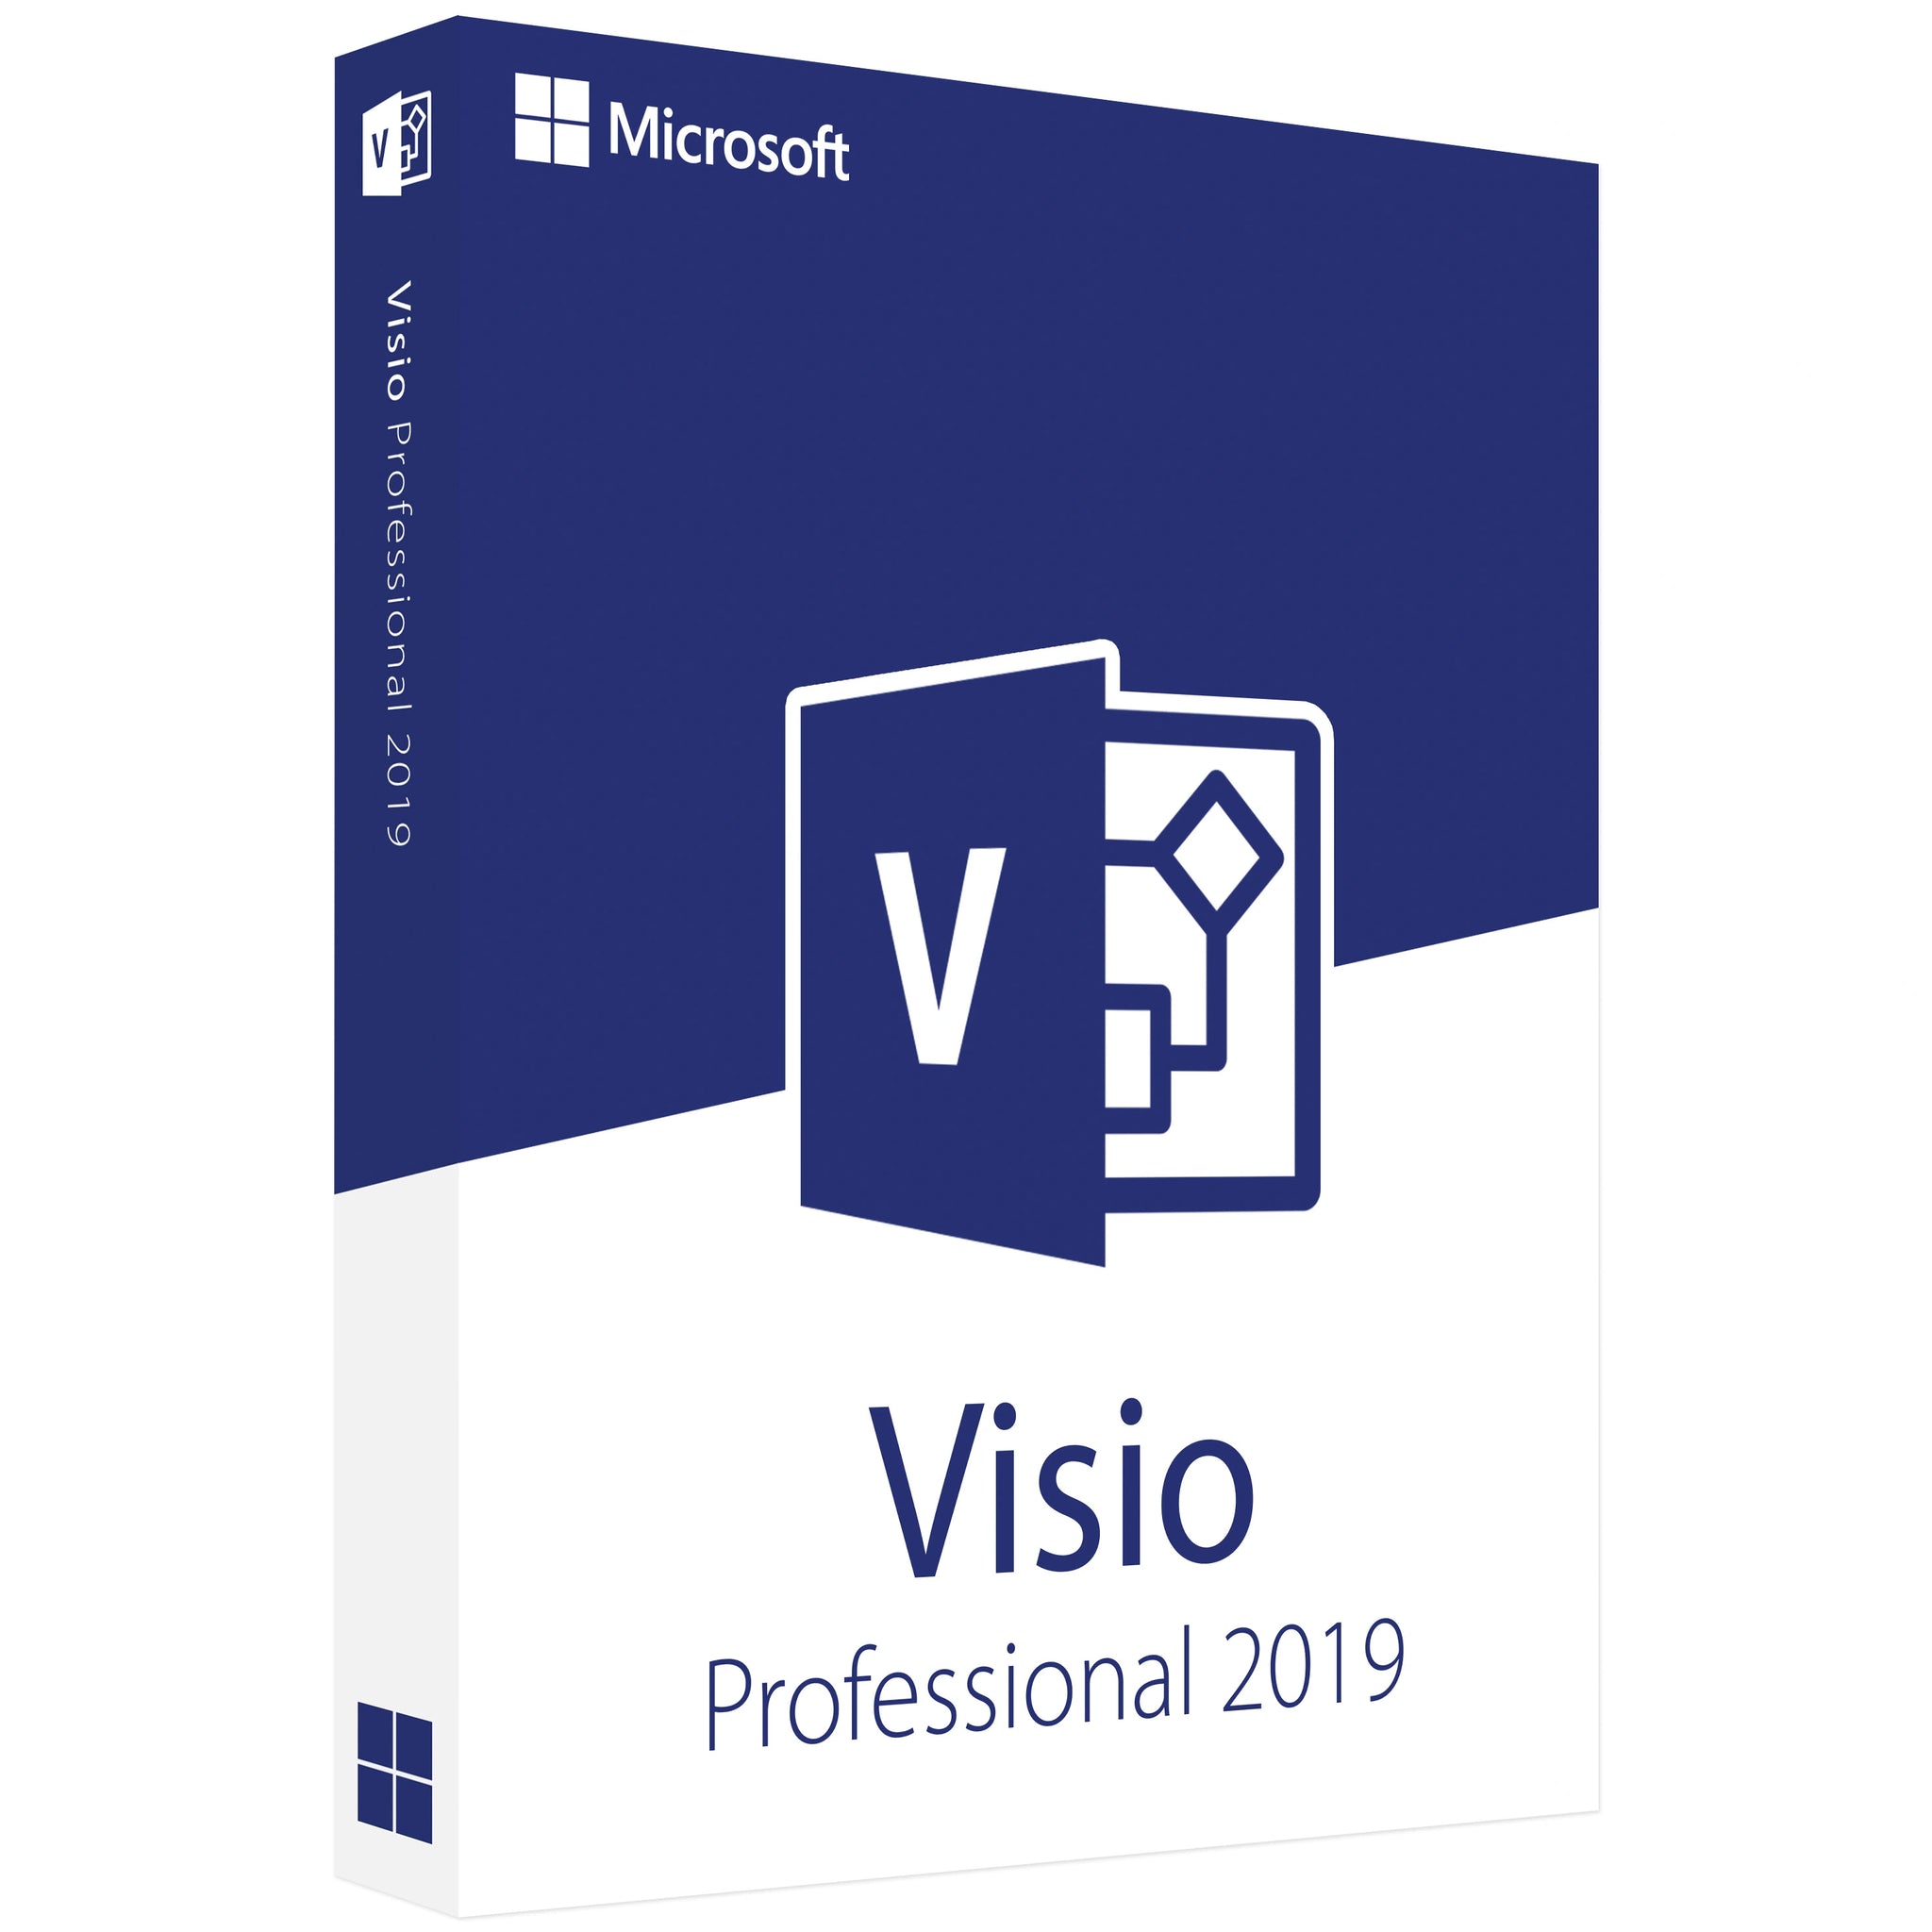 Microsoft Visio 2019 Professional- Lifetime License Key for 1 PC